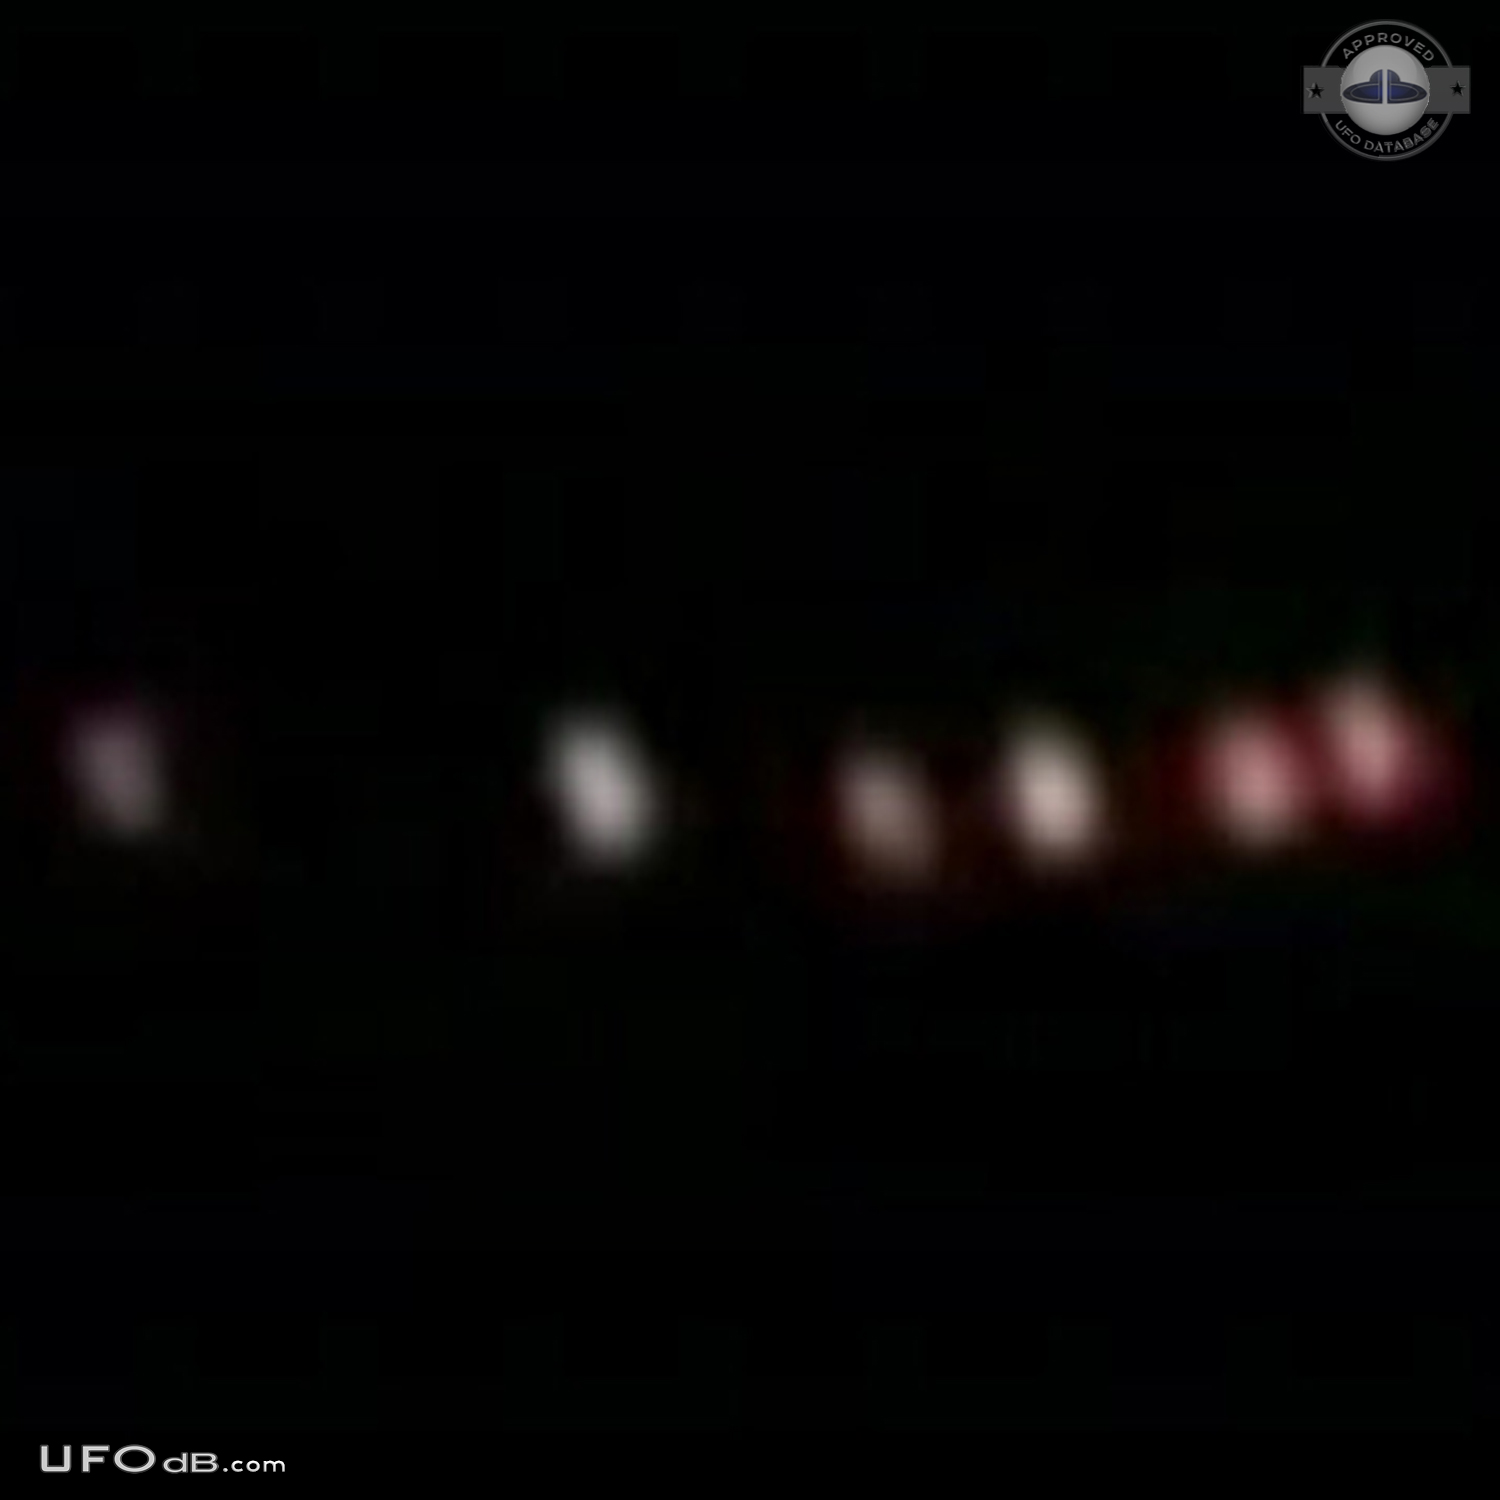 V Shape UFO made of six orange lights seen in North Carolina - 2012 UFO Picture #499-3